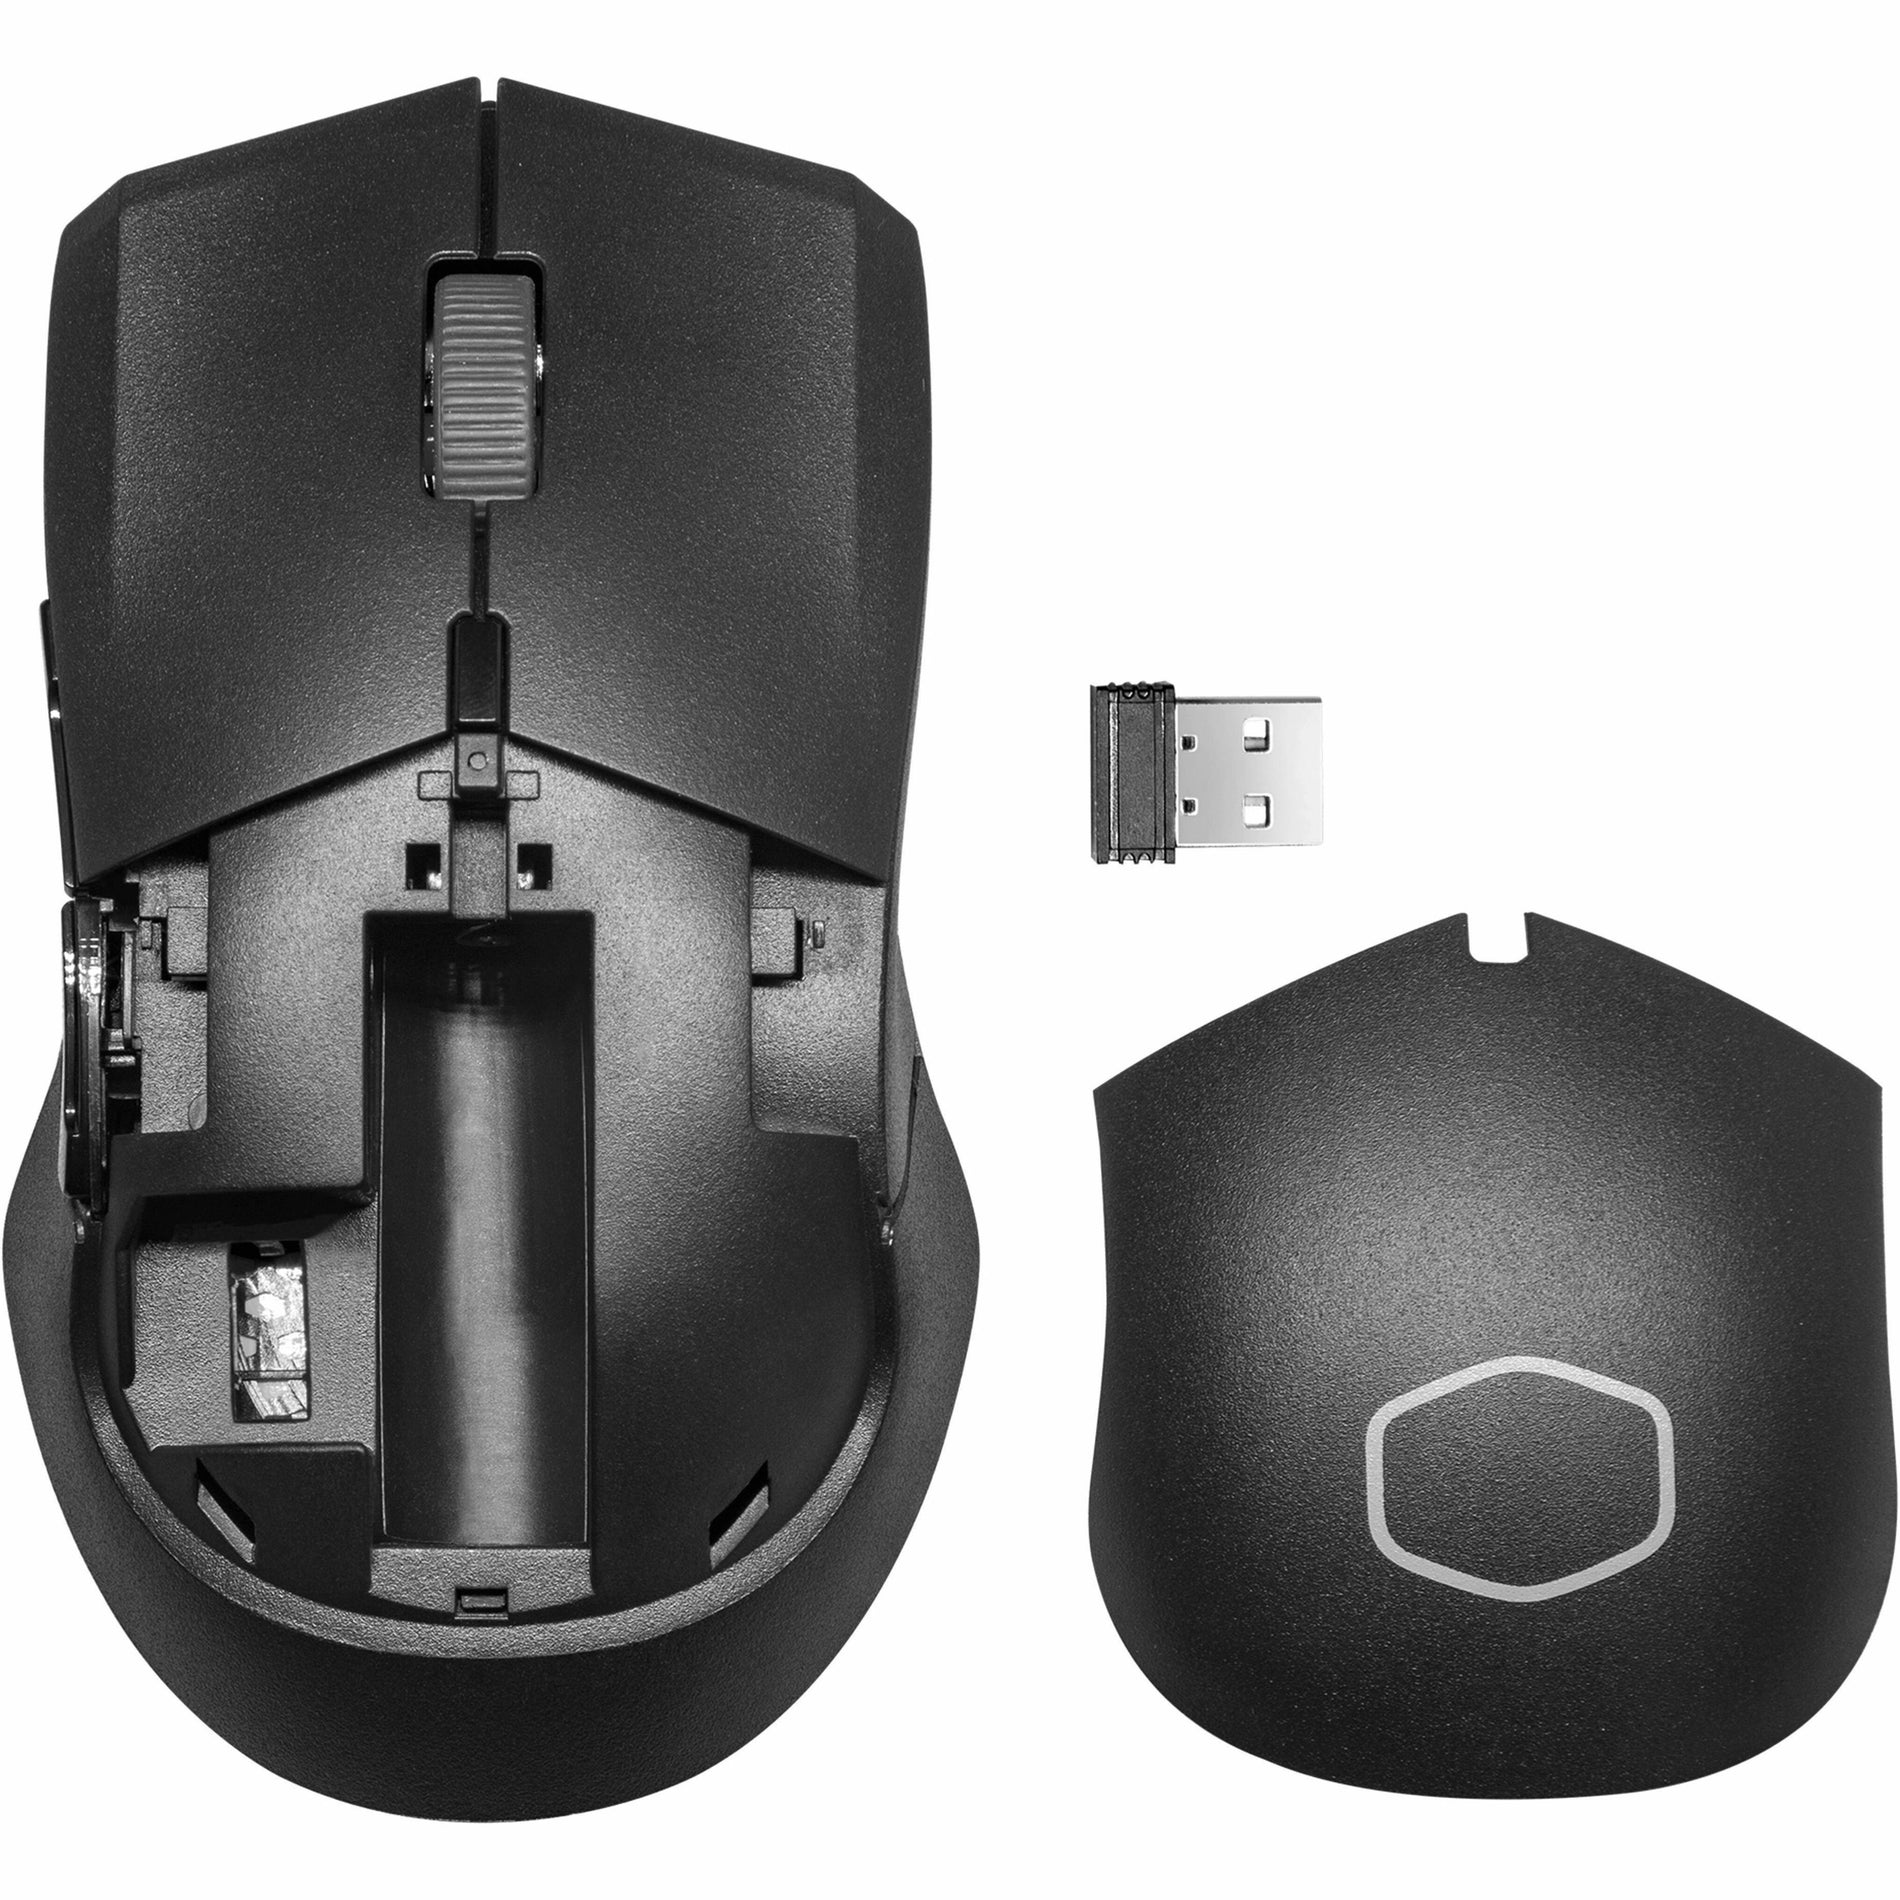 Cooler Master MM-311-KKOW1 MM311 Gaming Mouse, Symmetrical Design, 10000 dpi Optical Sensor, Wireless Connectivity